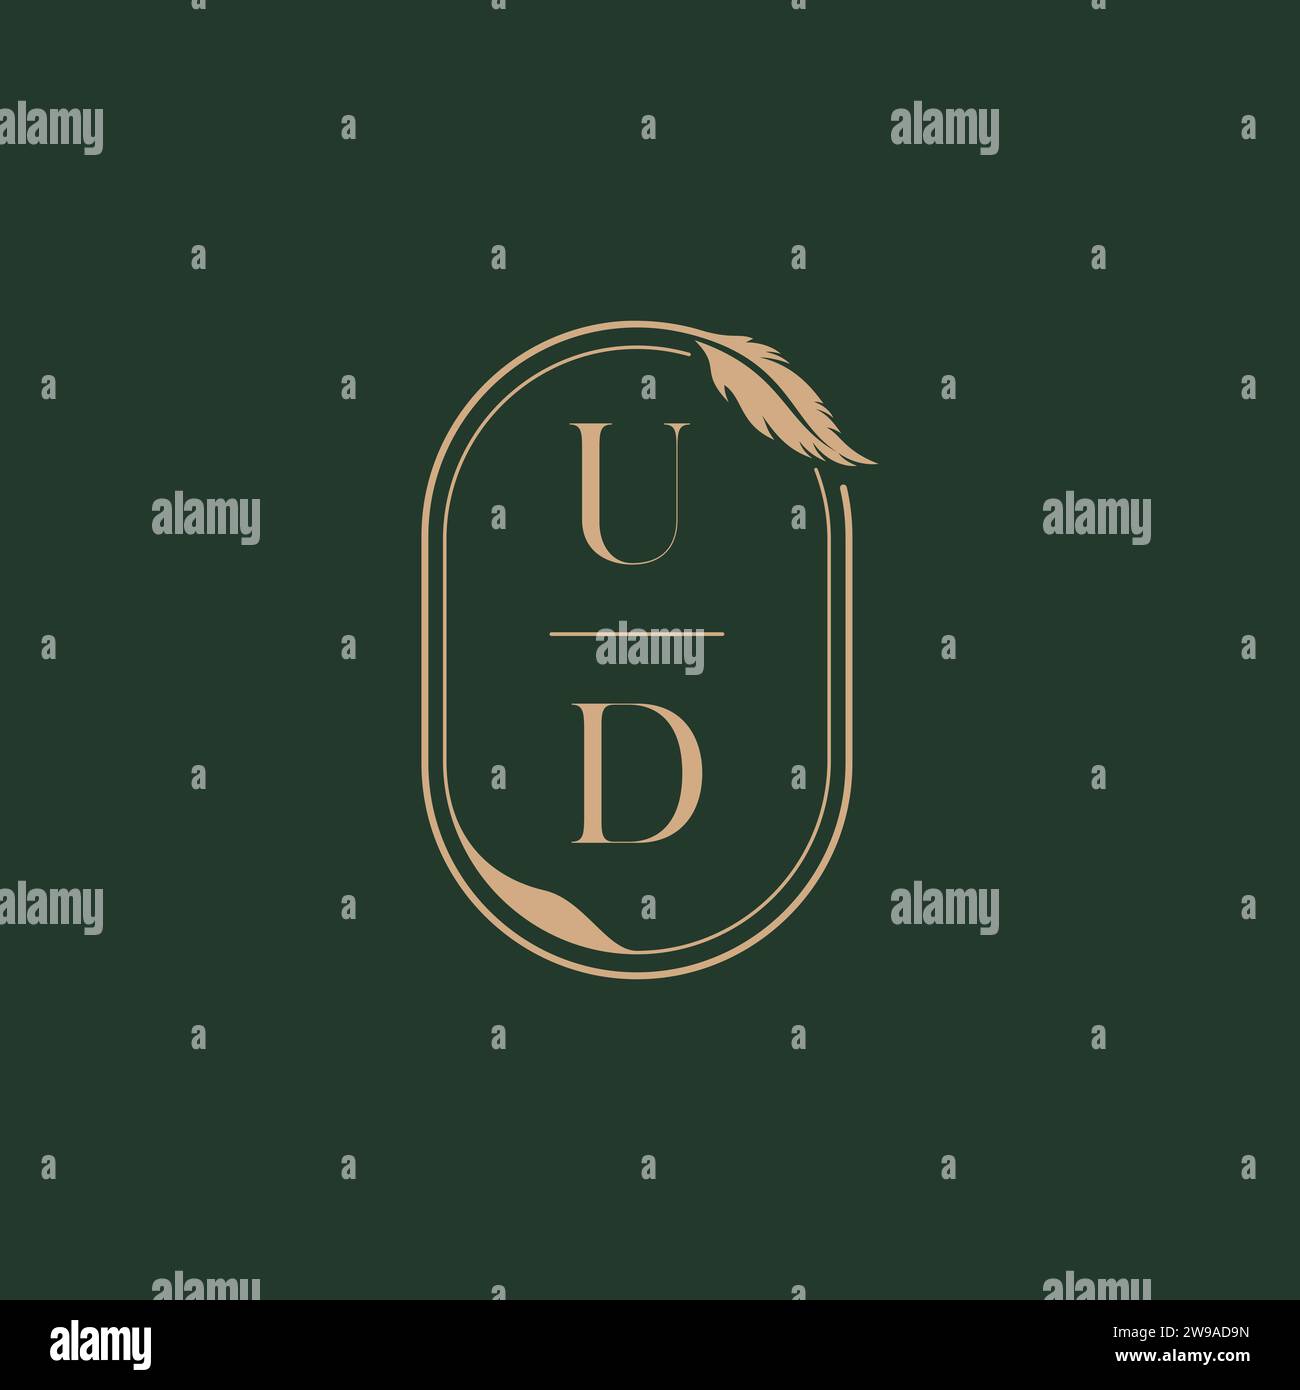 UD feather concept wedding monogram logo design ideas as inspiration Stock Vector